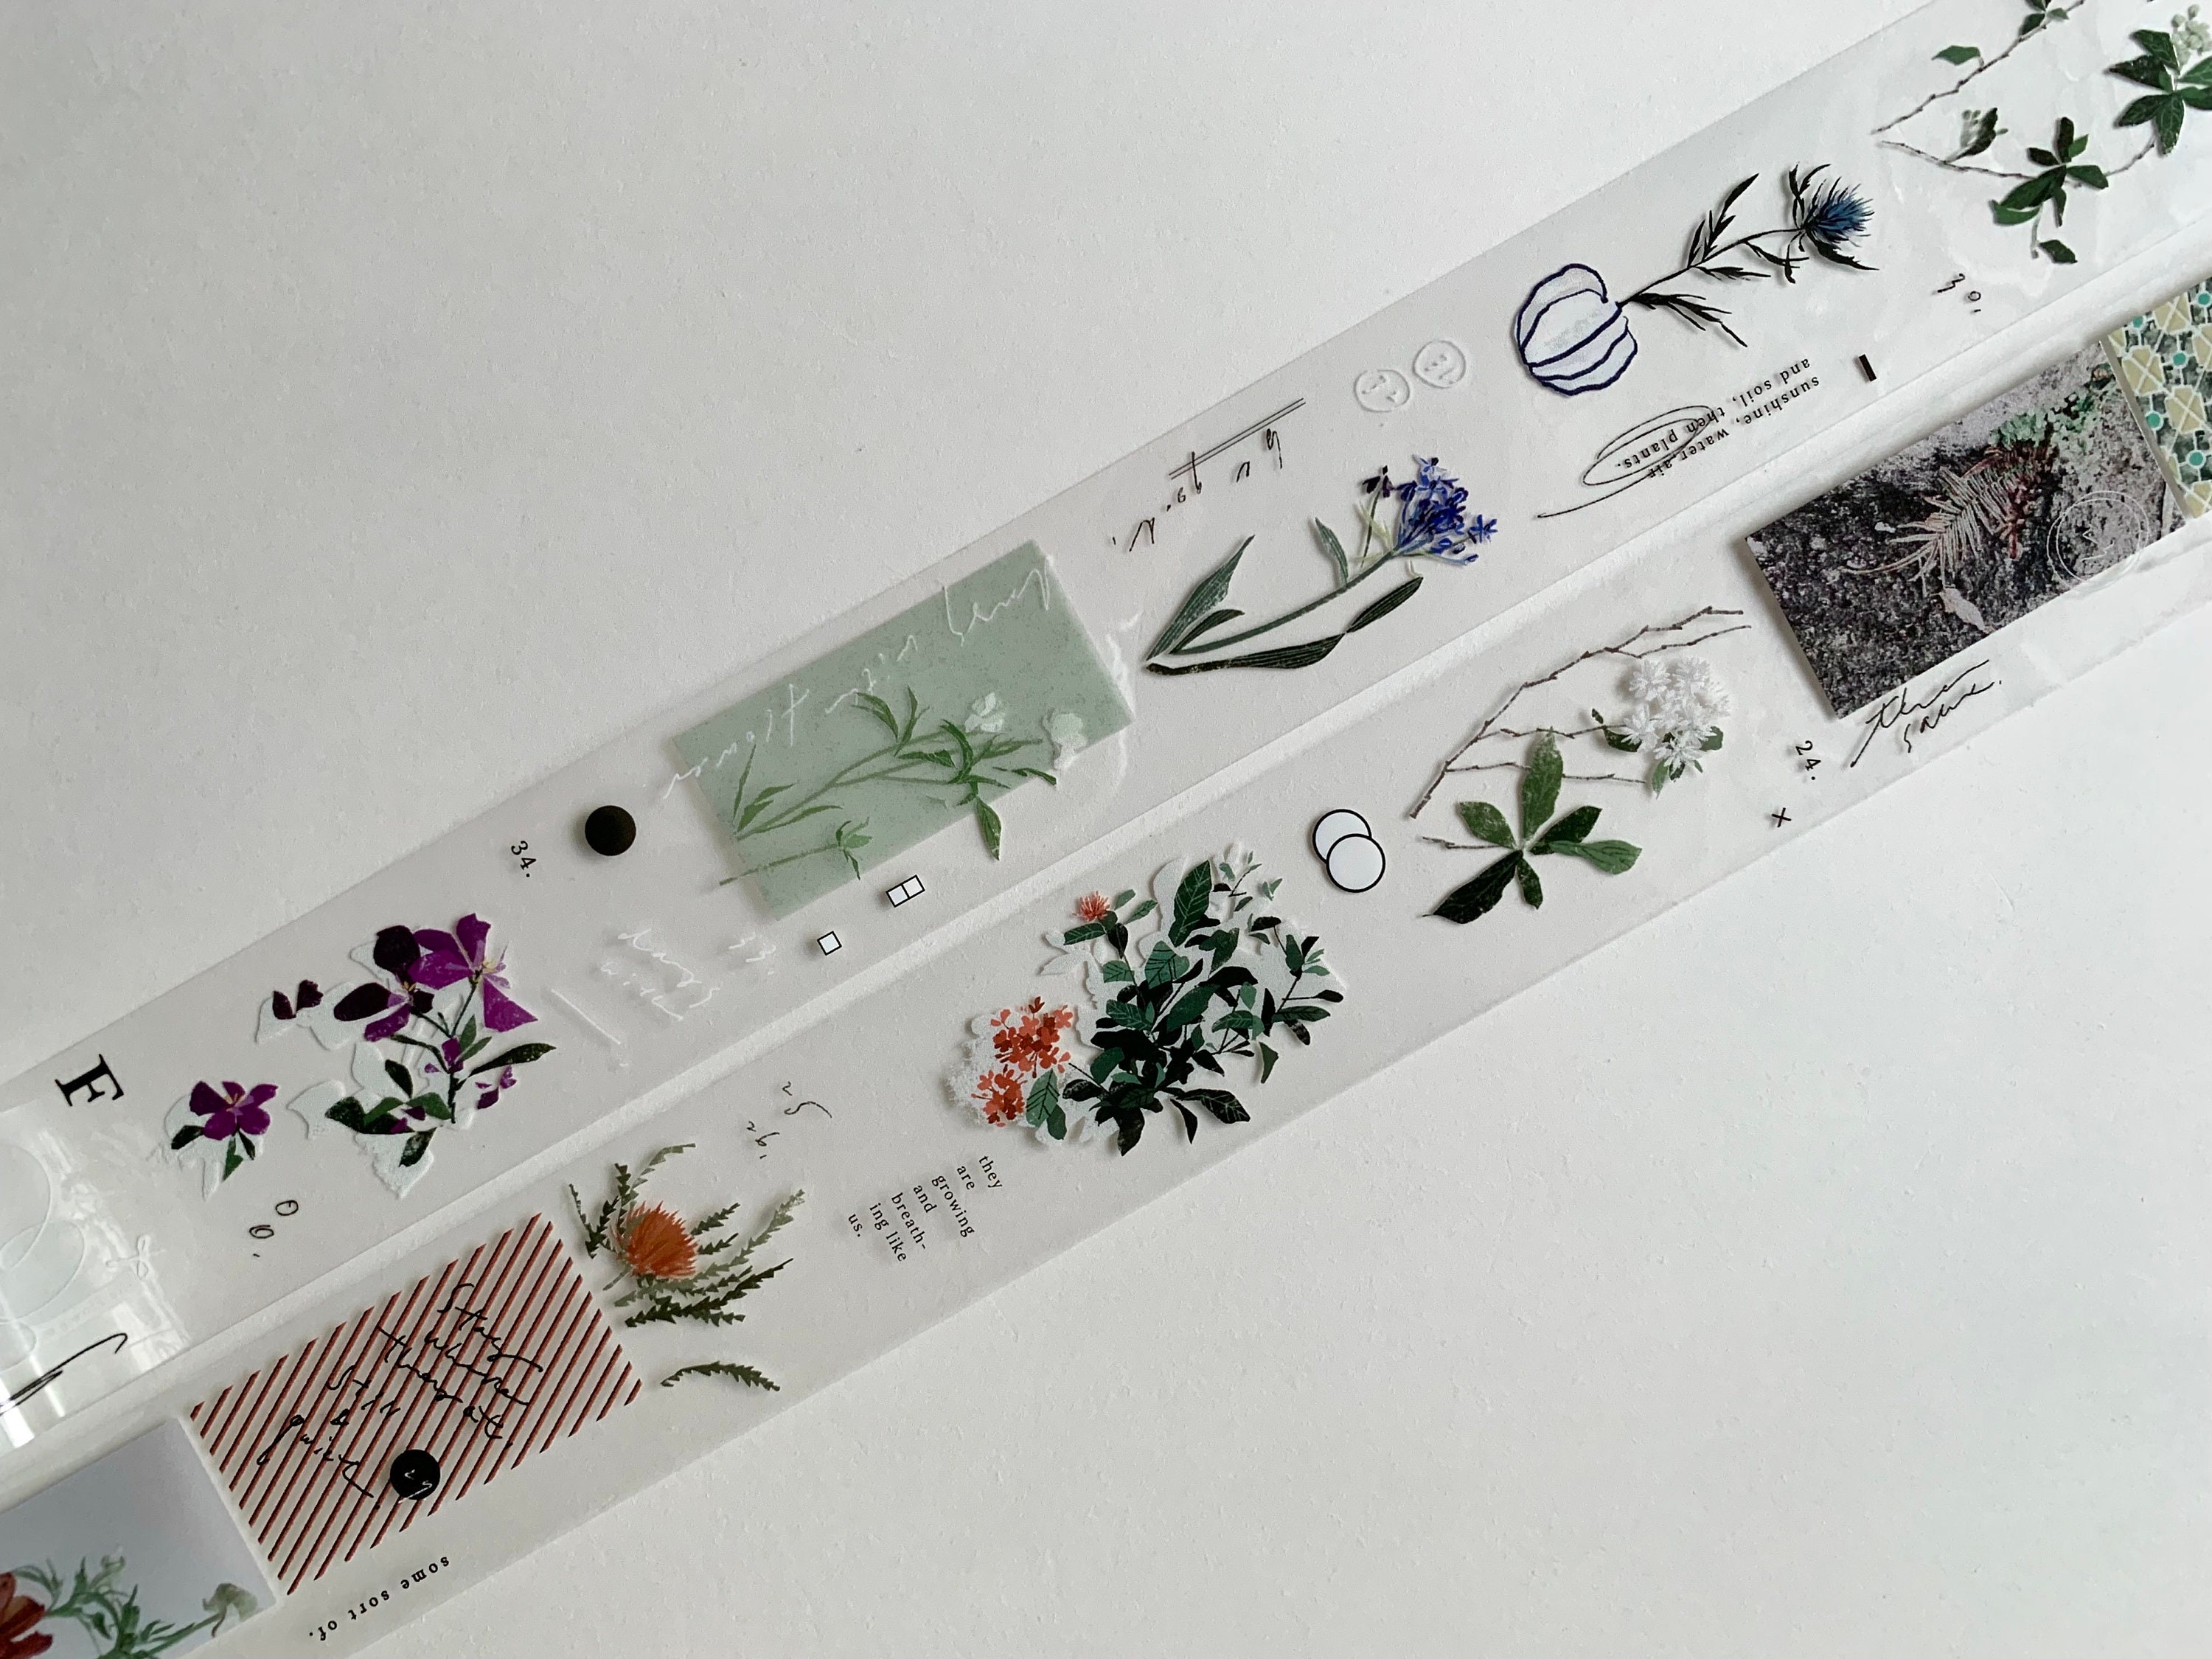 ROSES Washi Tape Printable Roses Collage Sheet Printable Strips Digital  Download Washi Tape Journaling Tags Scrapbook Instant Download 2225 